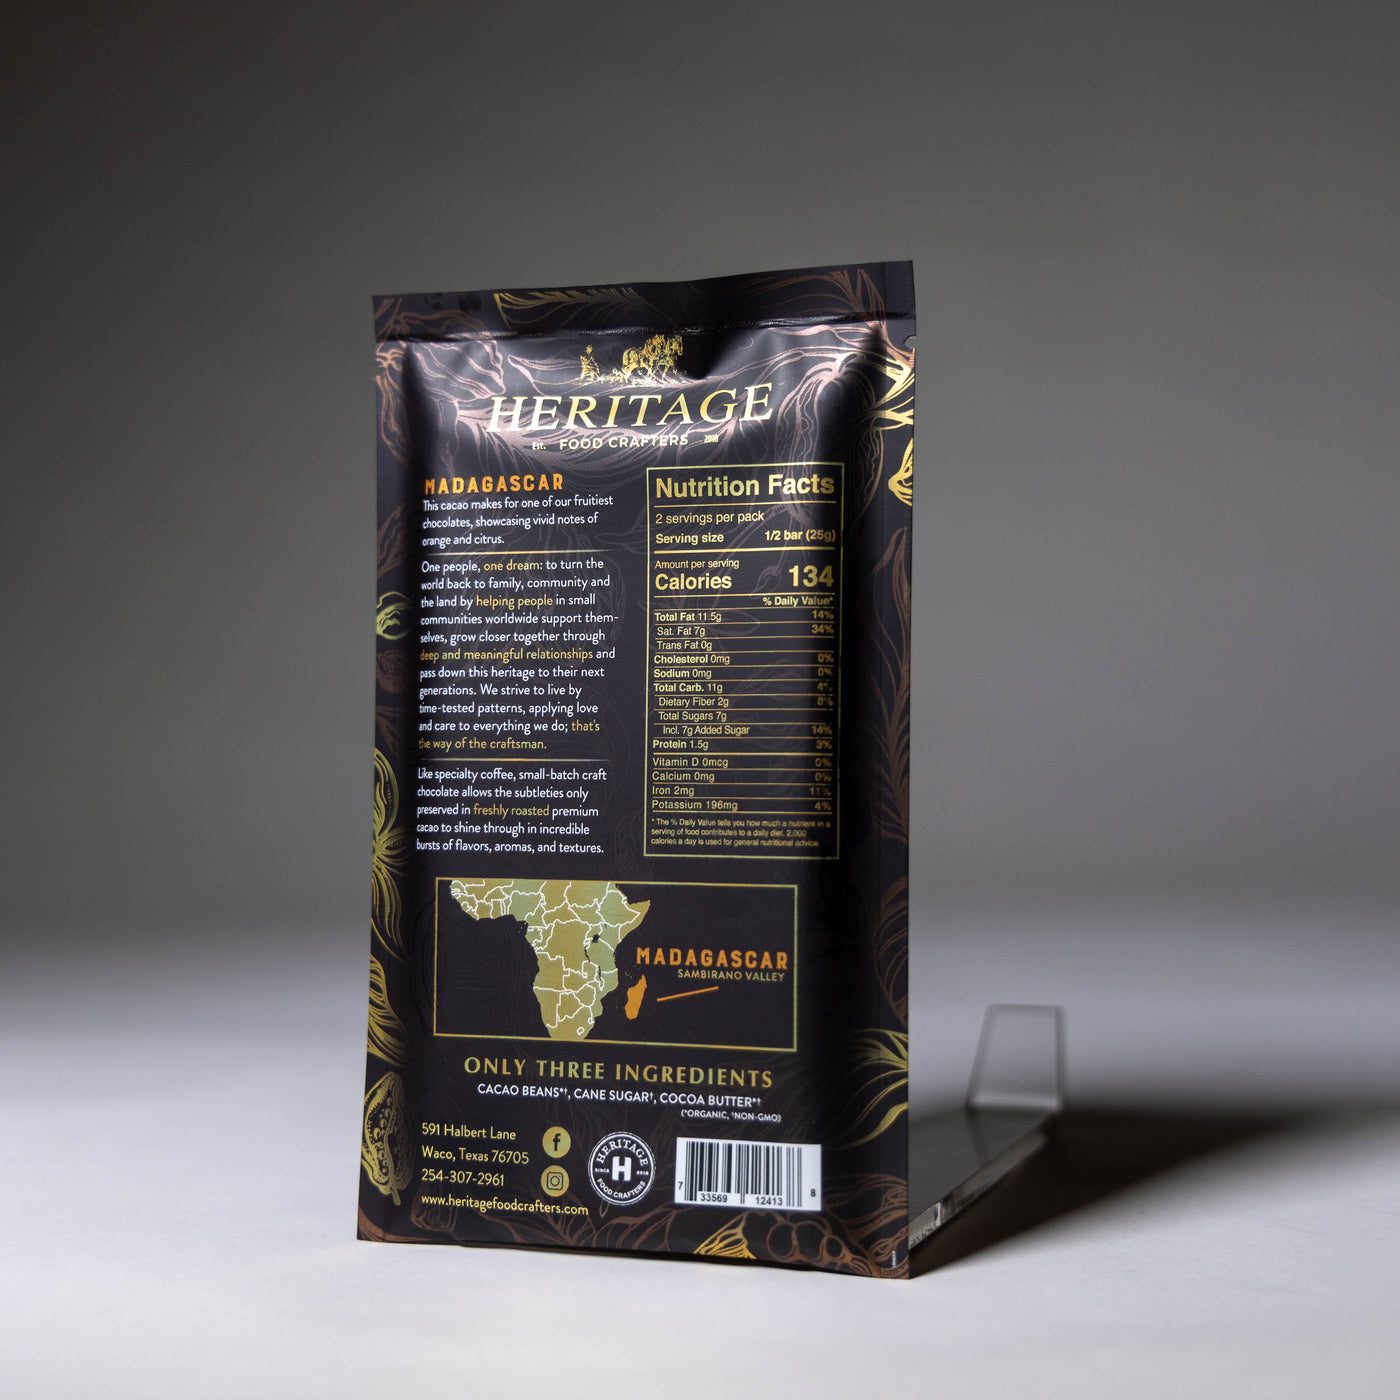 72% Madagascar Chocolate Bar 50g